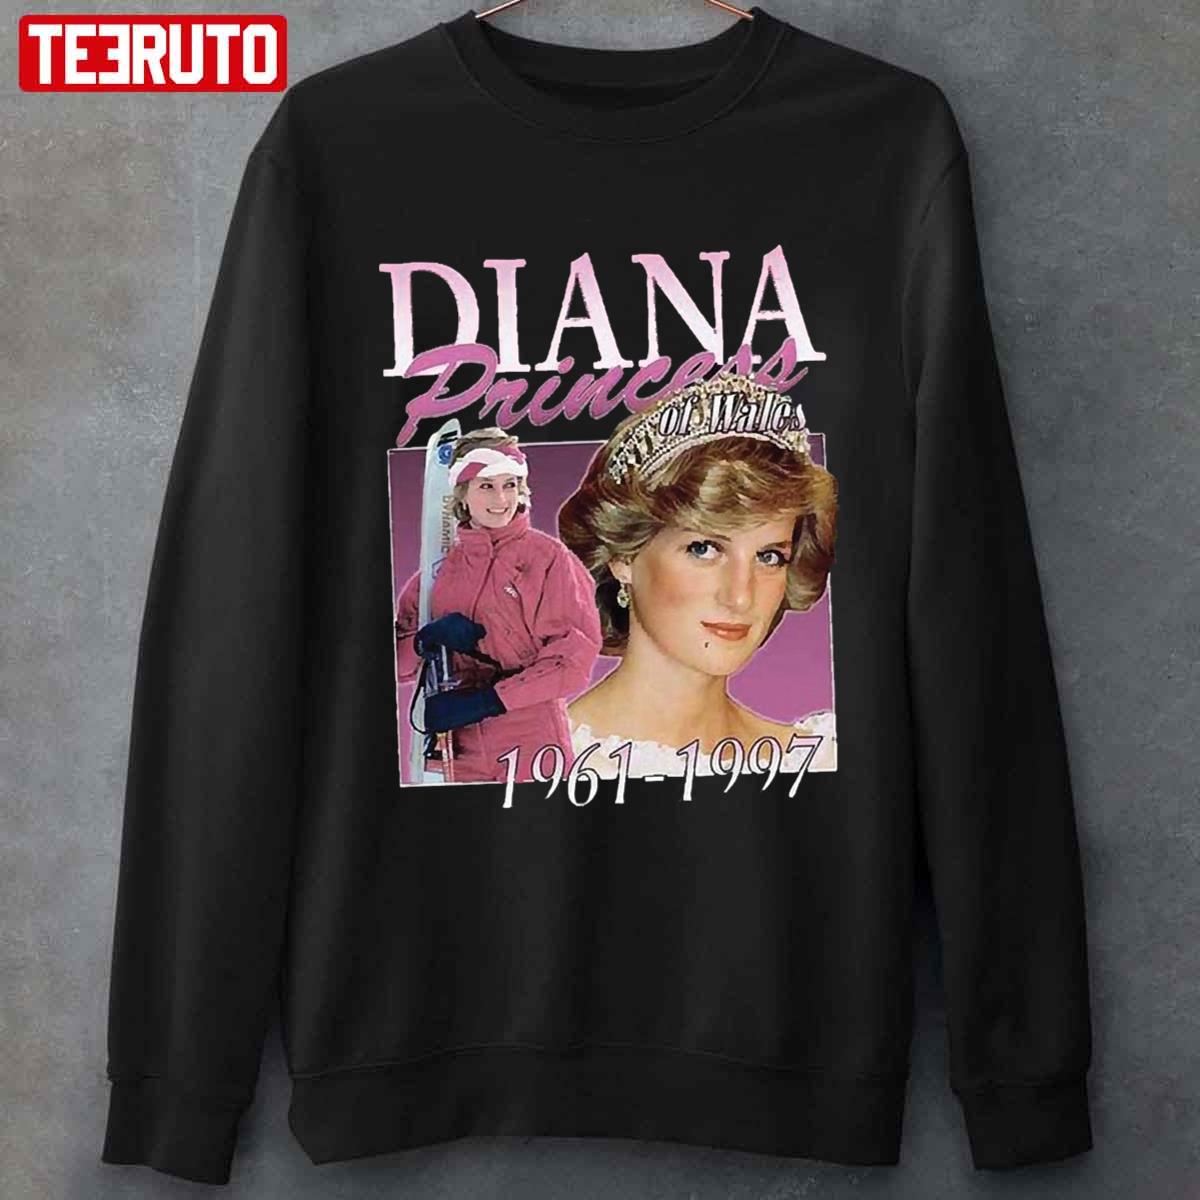 Retro 90s Vintage Sweatshirt Princess Diana Fashion 90s graphic shirt Princess Diana Sweatshirt